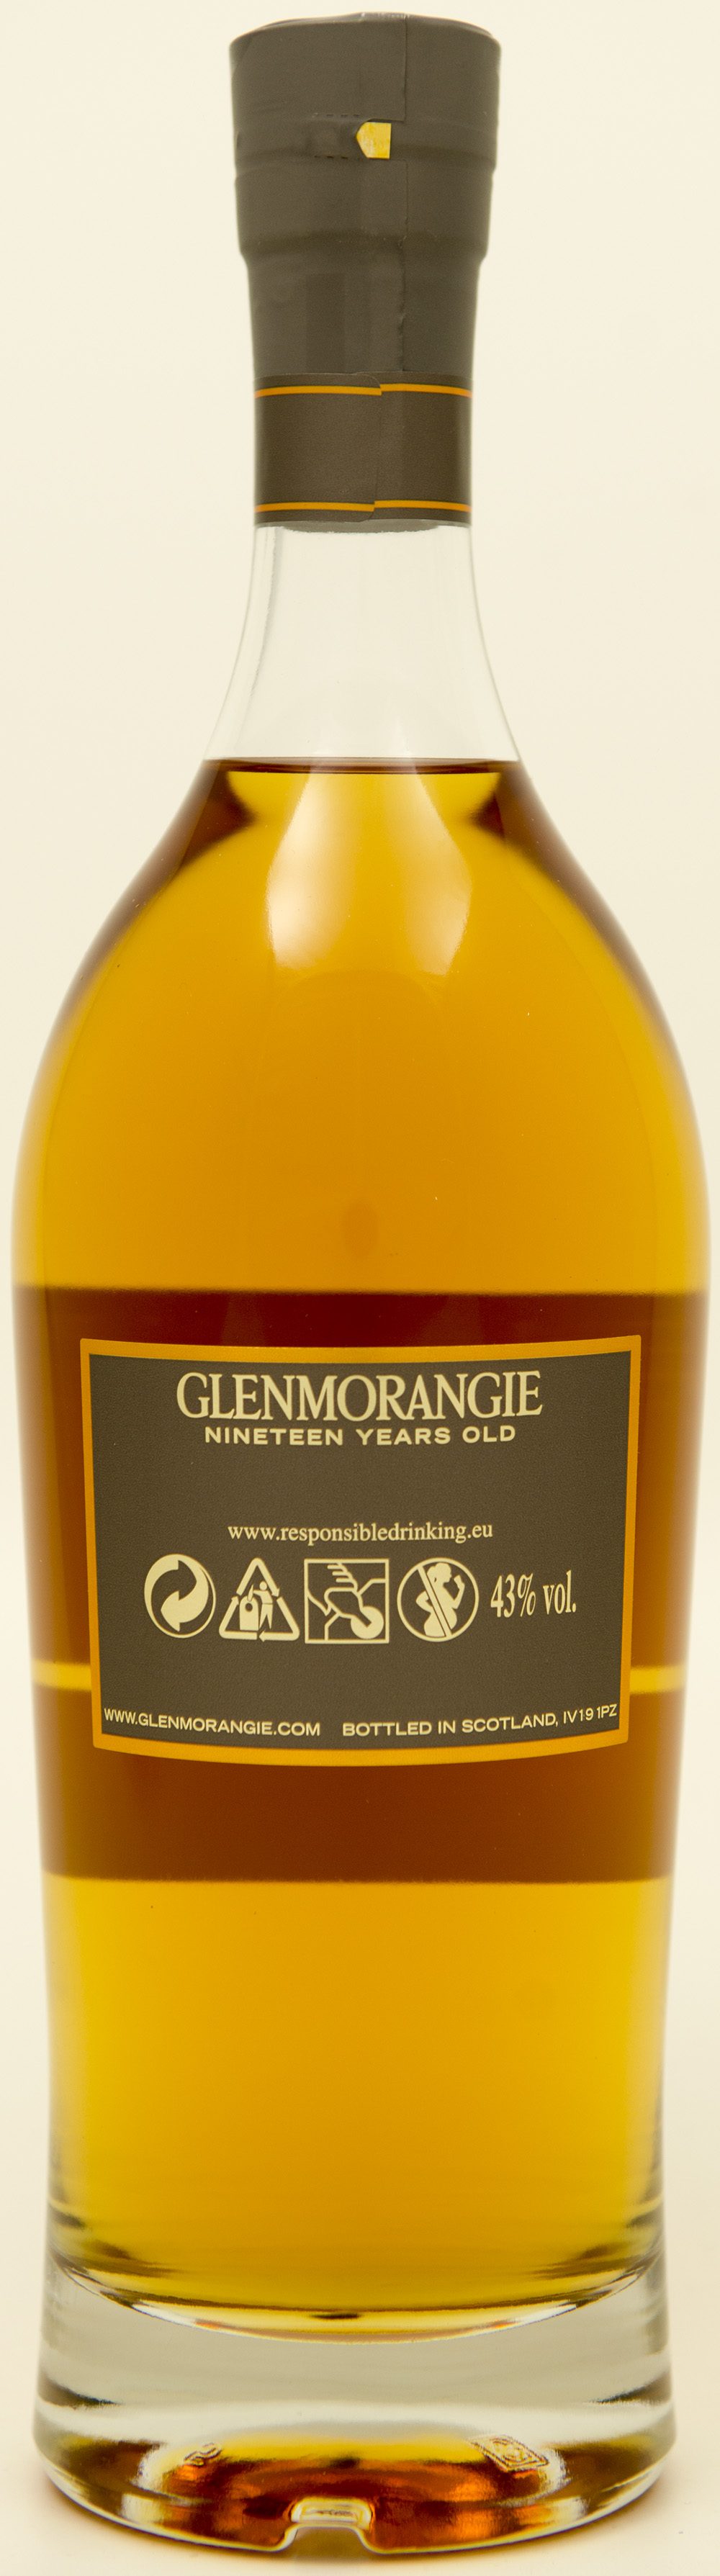 Billede: DSC_3718 - Glenmorangie 19 Finest Reserve (bottle back).jpg